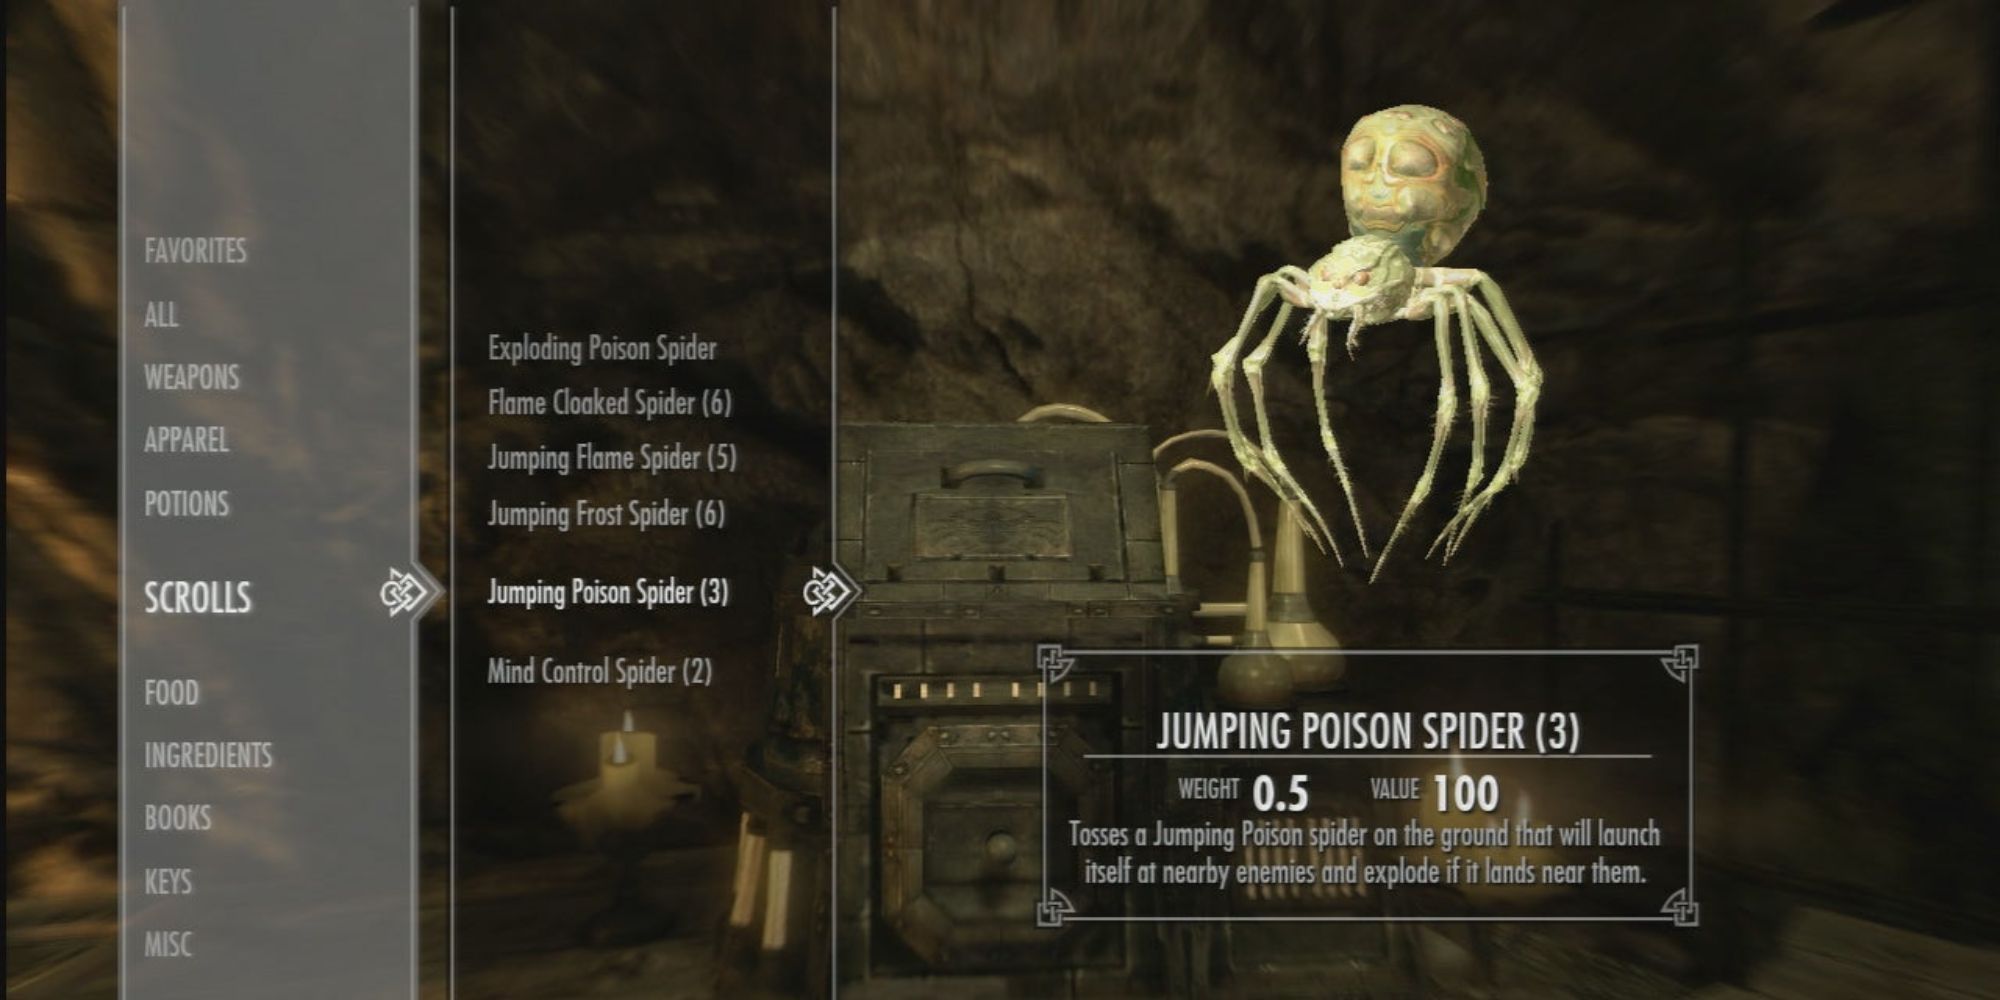 skyrim_jumping poison spider in inventory